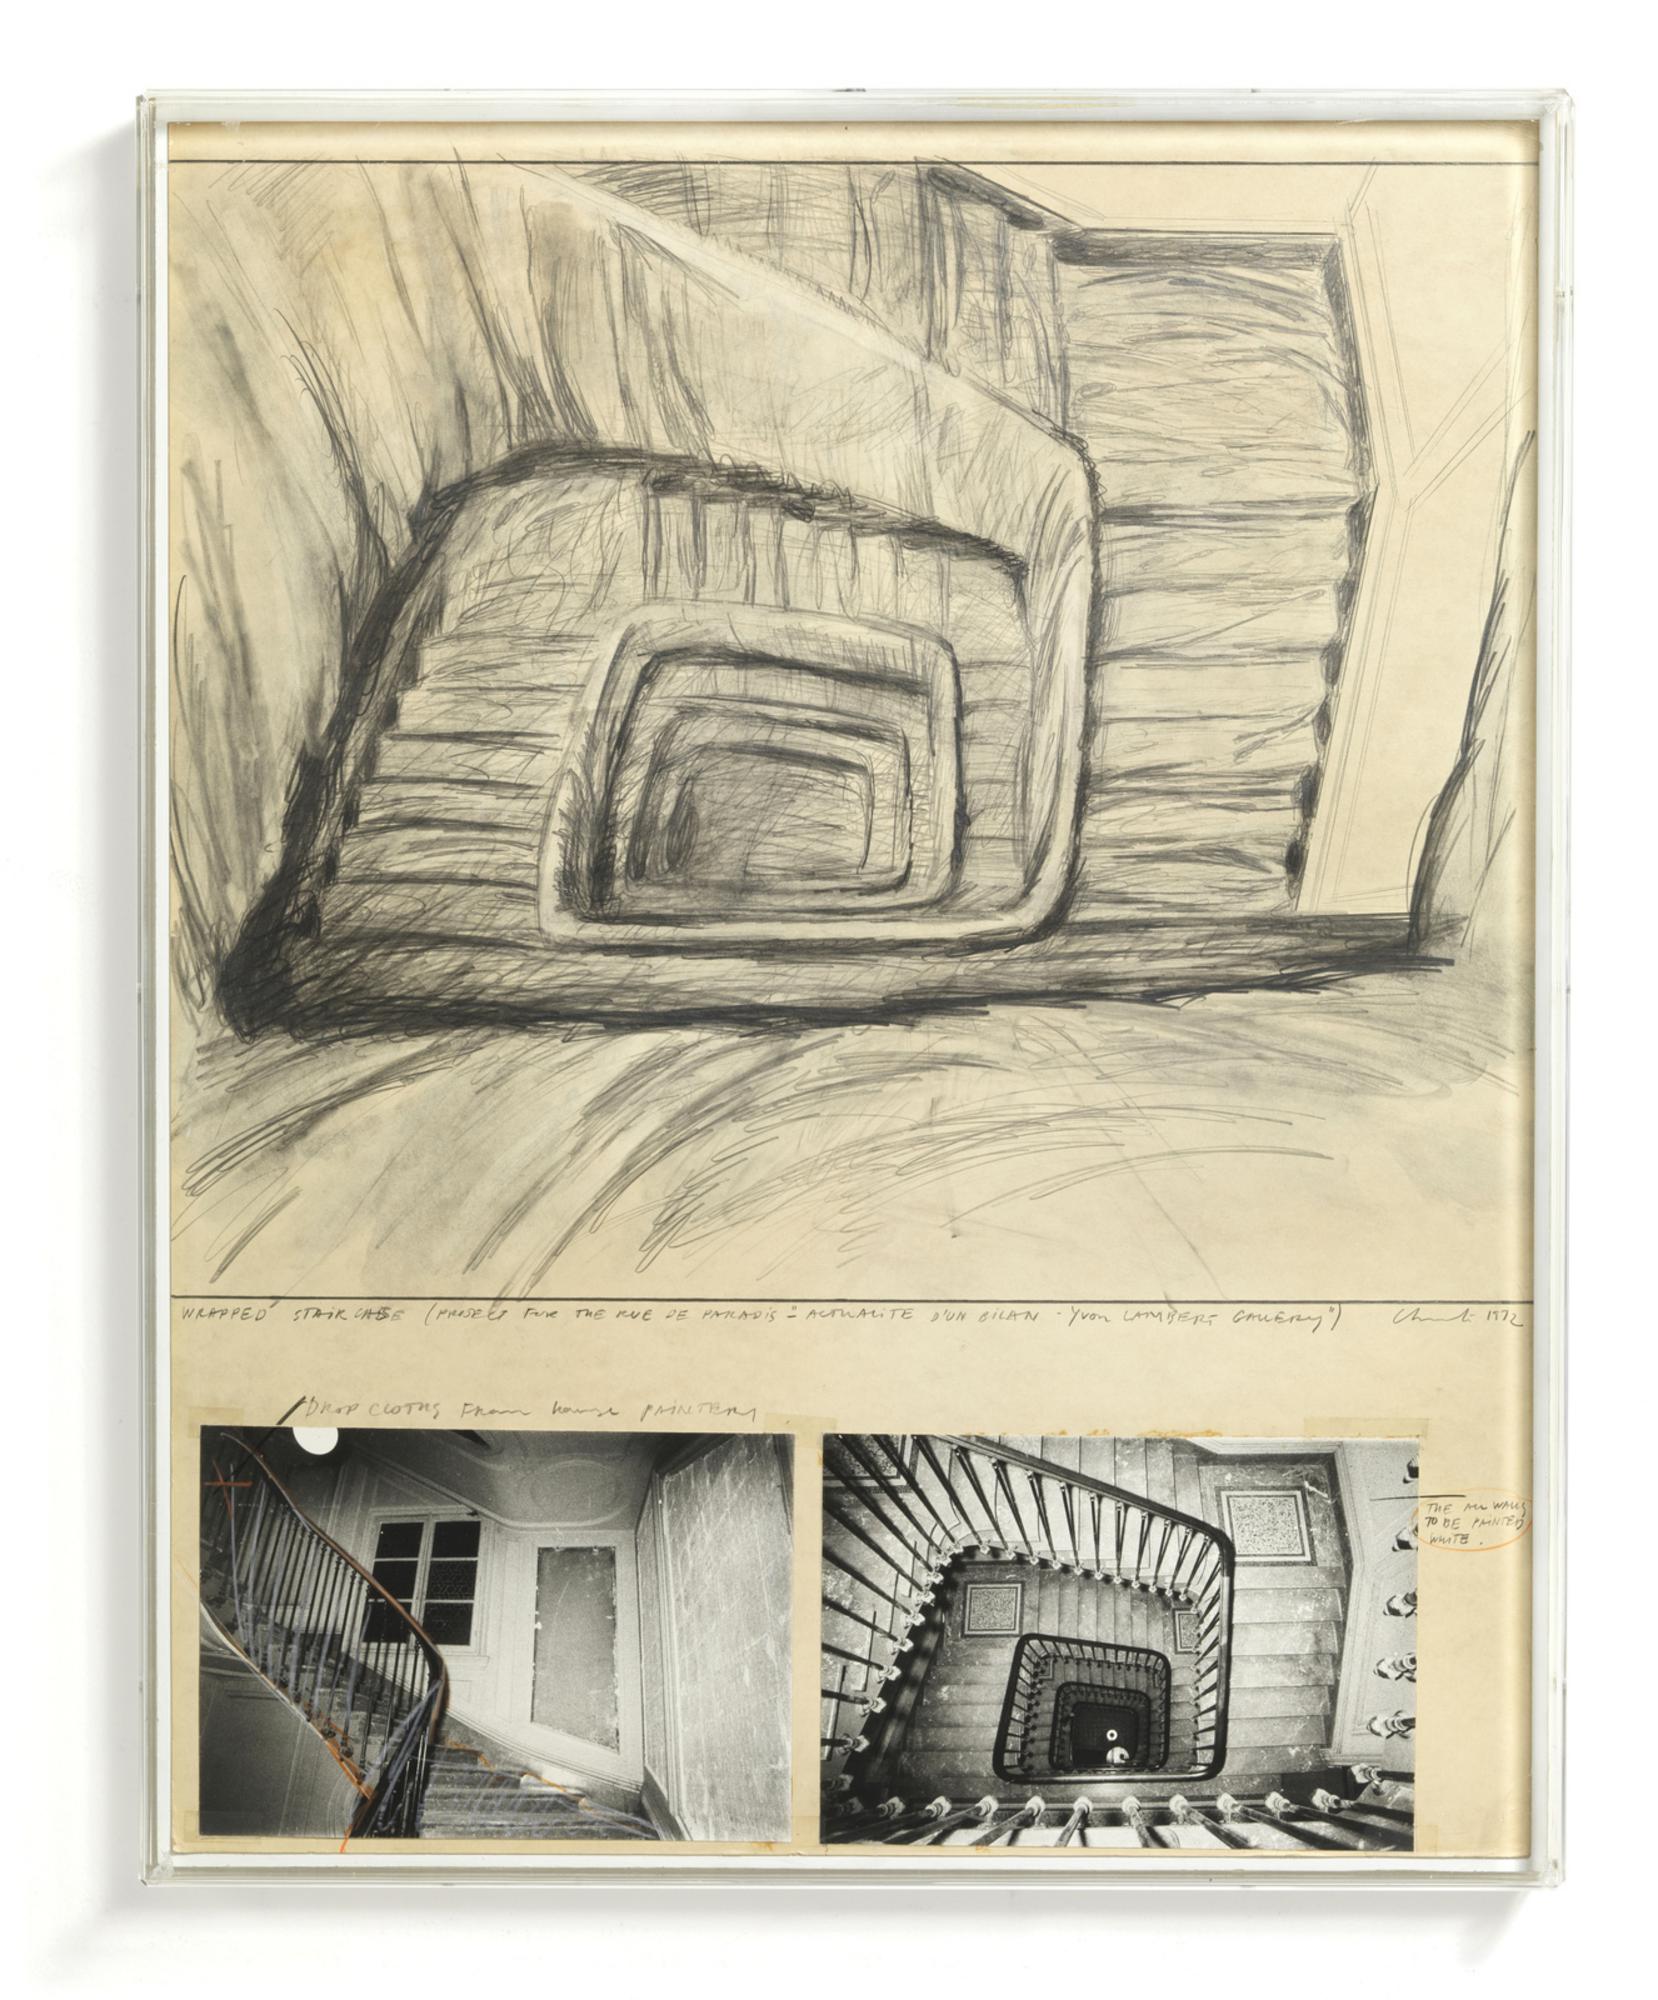 Christo (1935 - 2020) WRAPPED STAIR CASE tecnica mista su carta, cm 71x56...